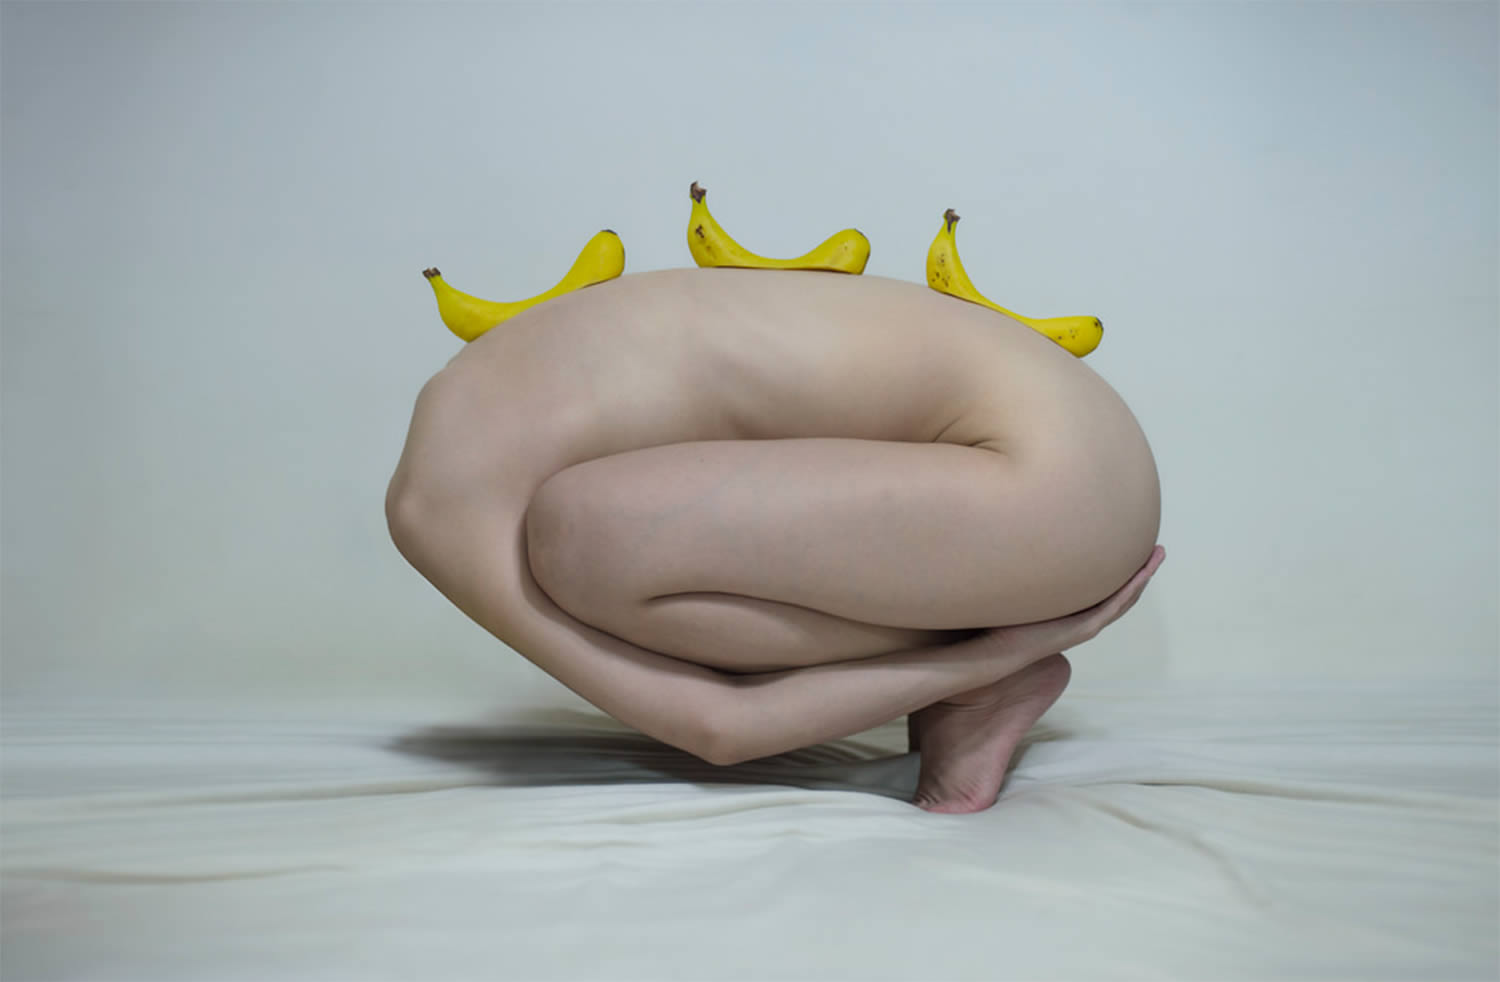 bananas on back, photo by yung cheng lin